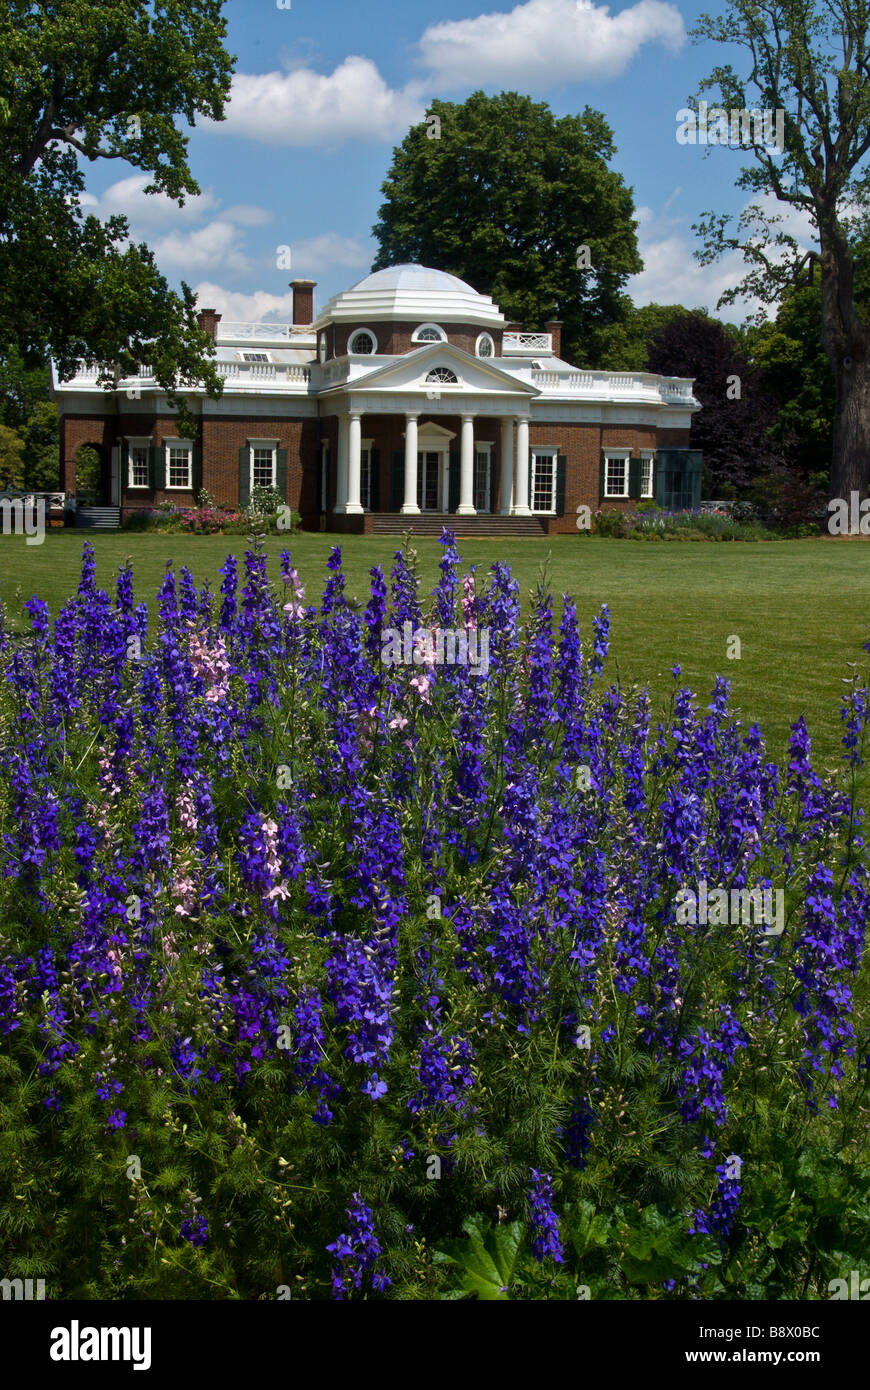 Facade of a mansion, Home of Thomas Jefferson, Monticello, Charlottesville, Virginia, USA Stock Photo